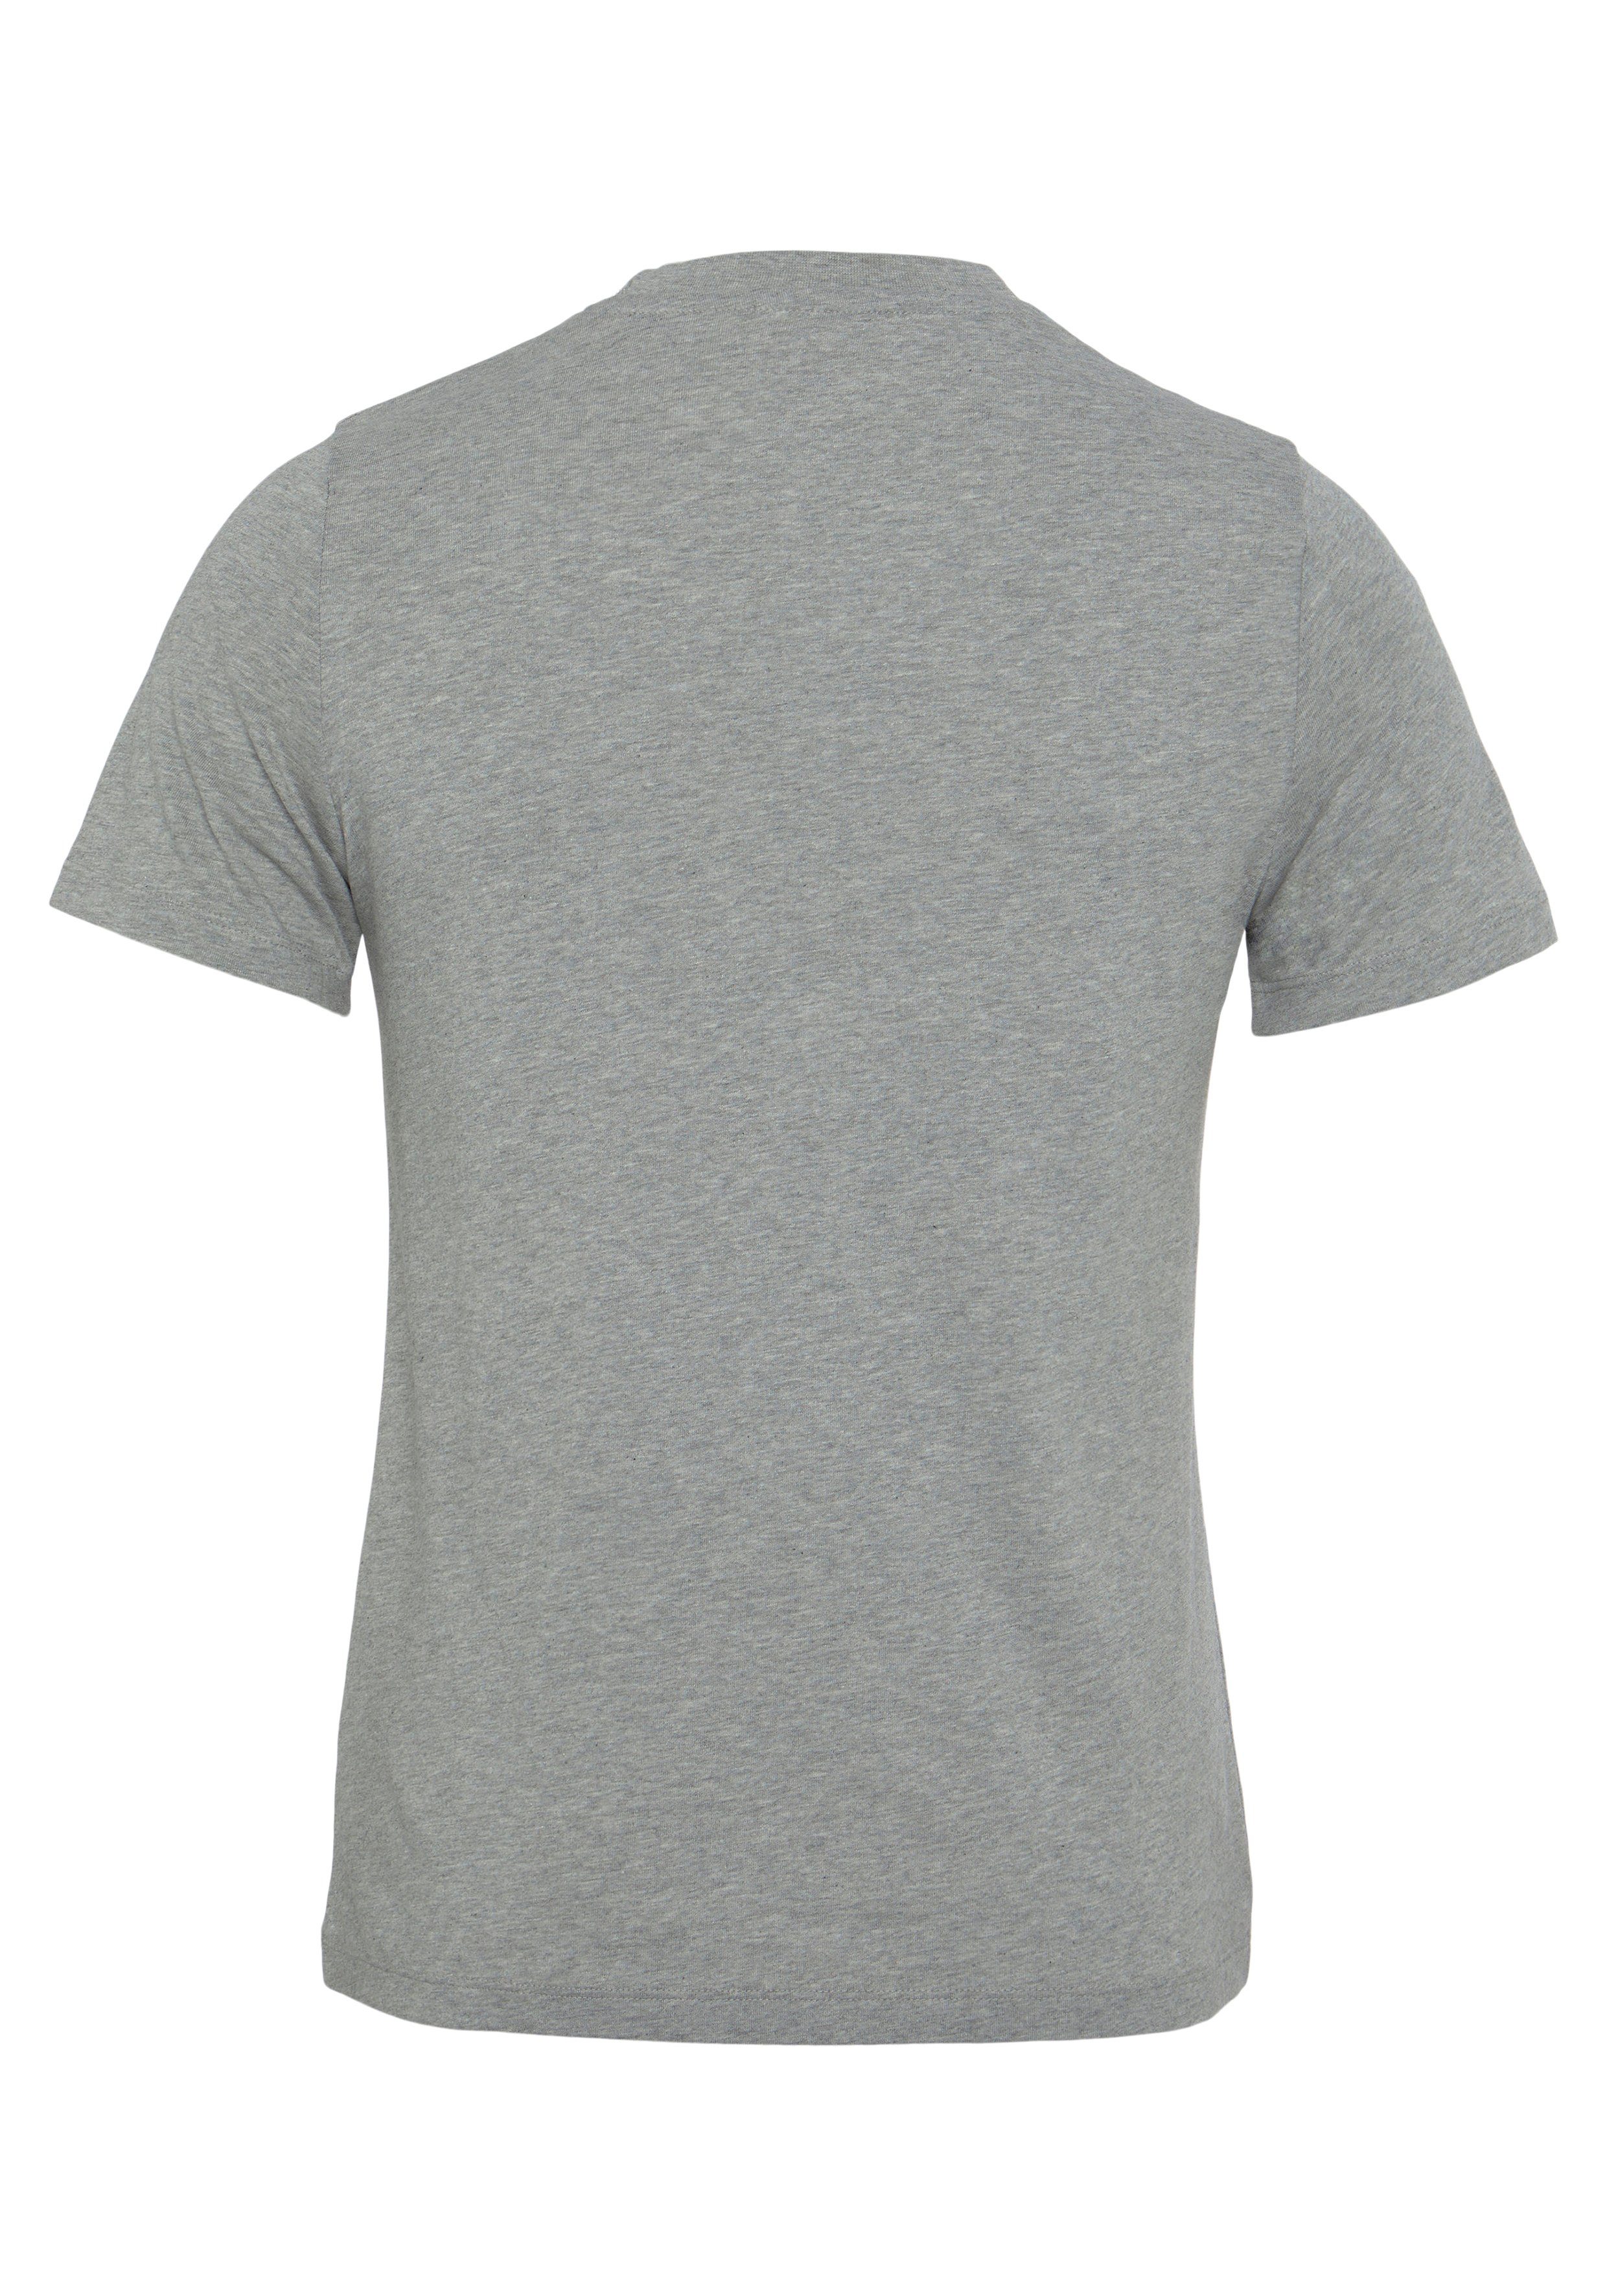 grey heather T-Shirt medium Graphic Read Reebok Reebok Tee